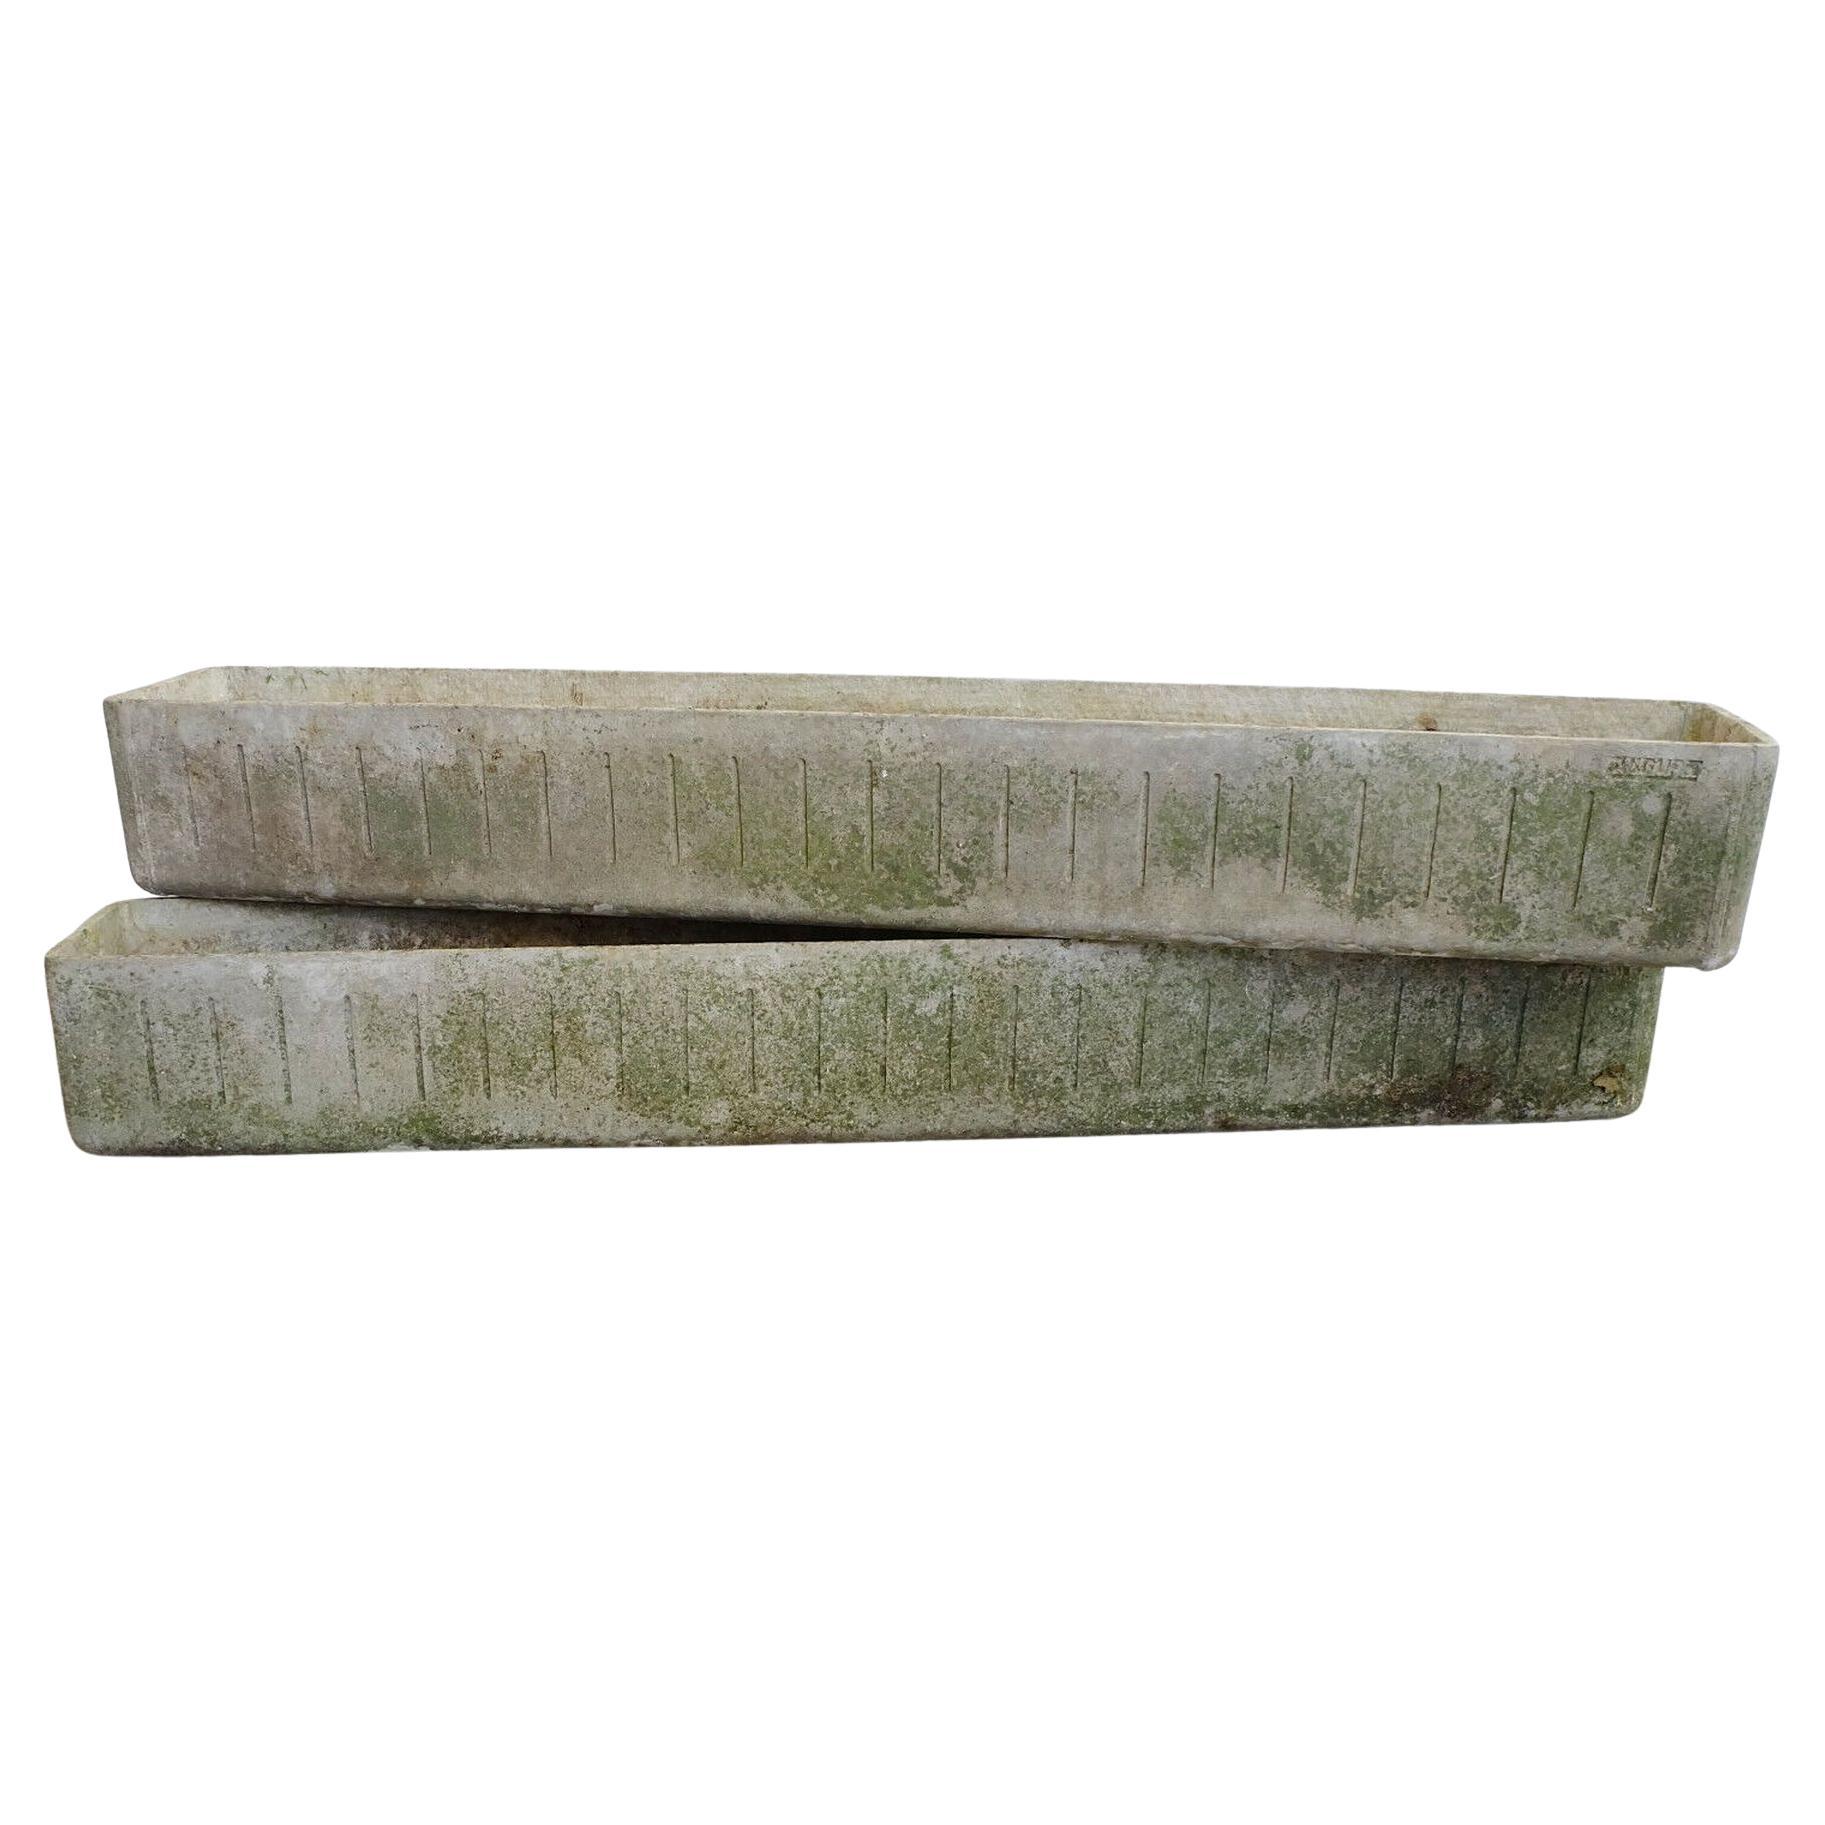 2 rectangular 100cm mid century fiber cement PLANTERS willy guhl era - set 2 For Sale